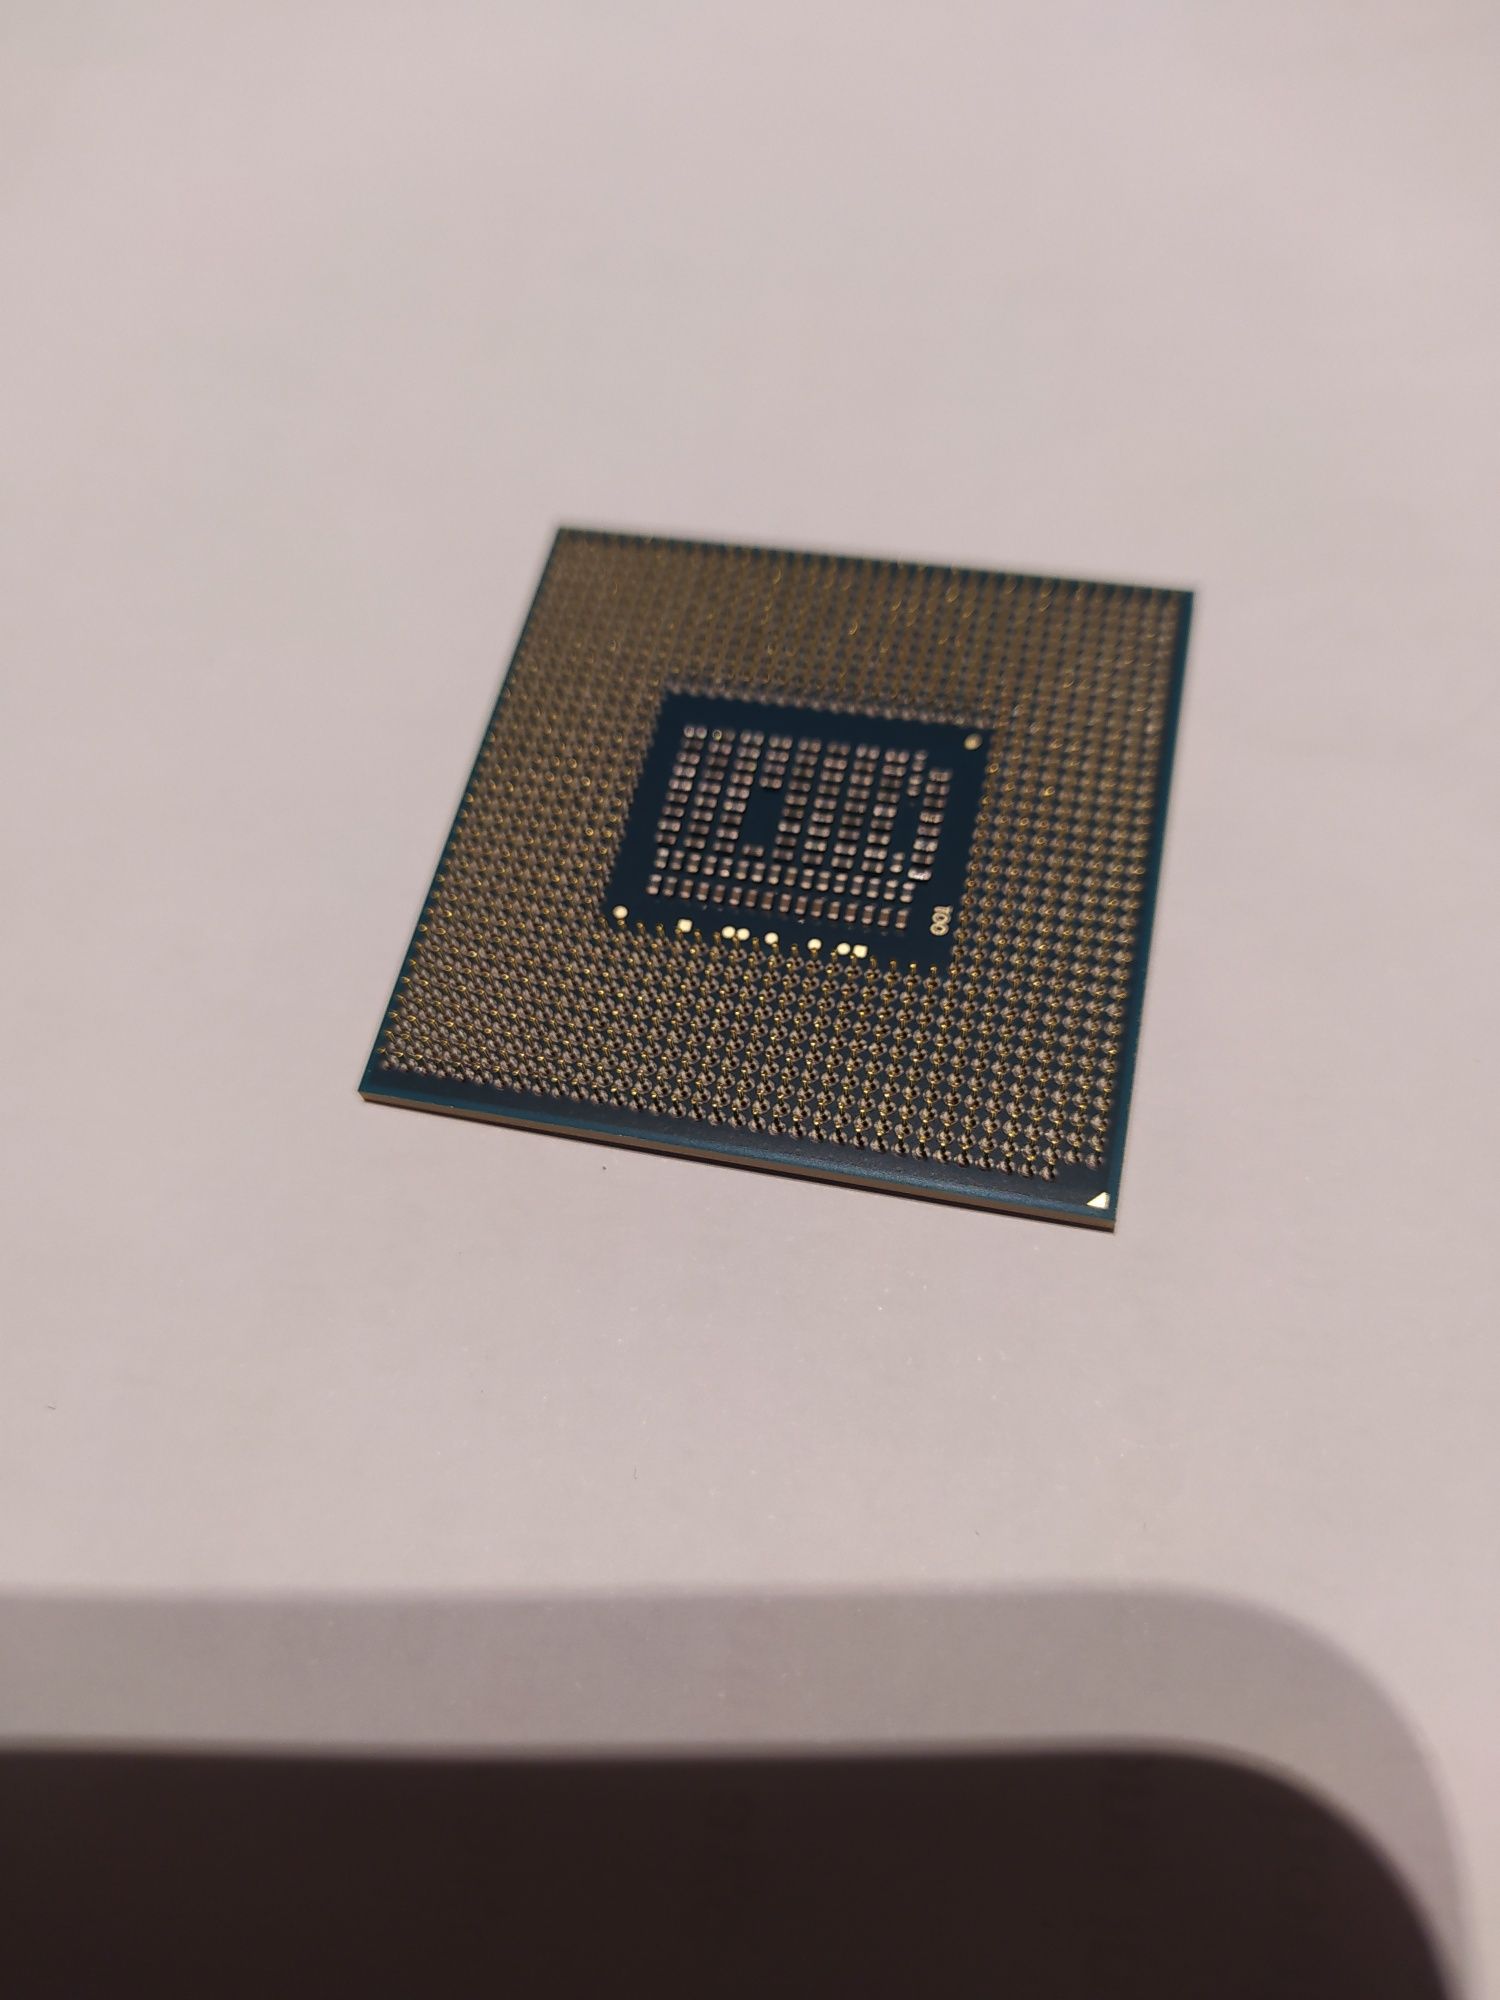 Procesor Intel Core i3-3110M